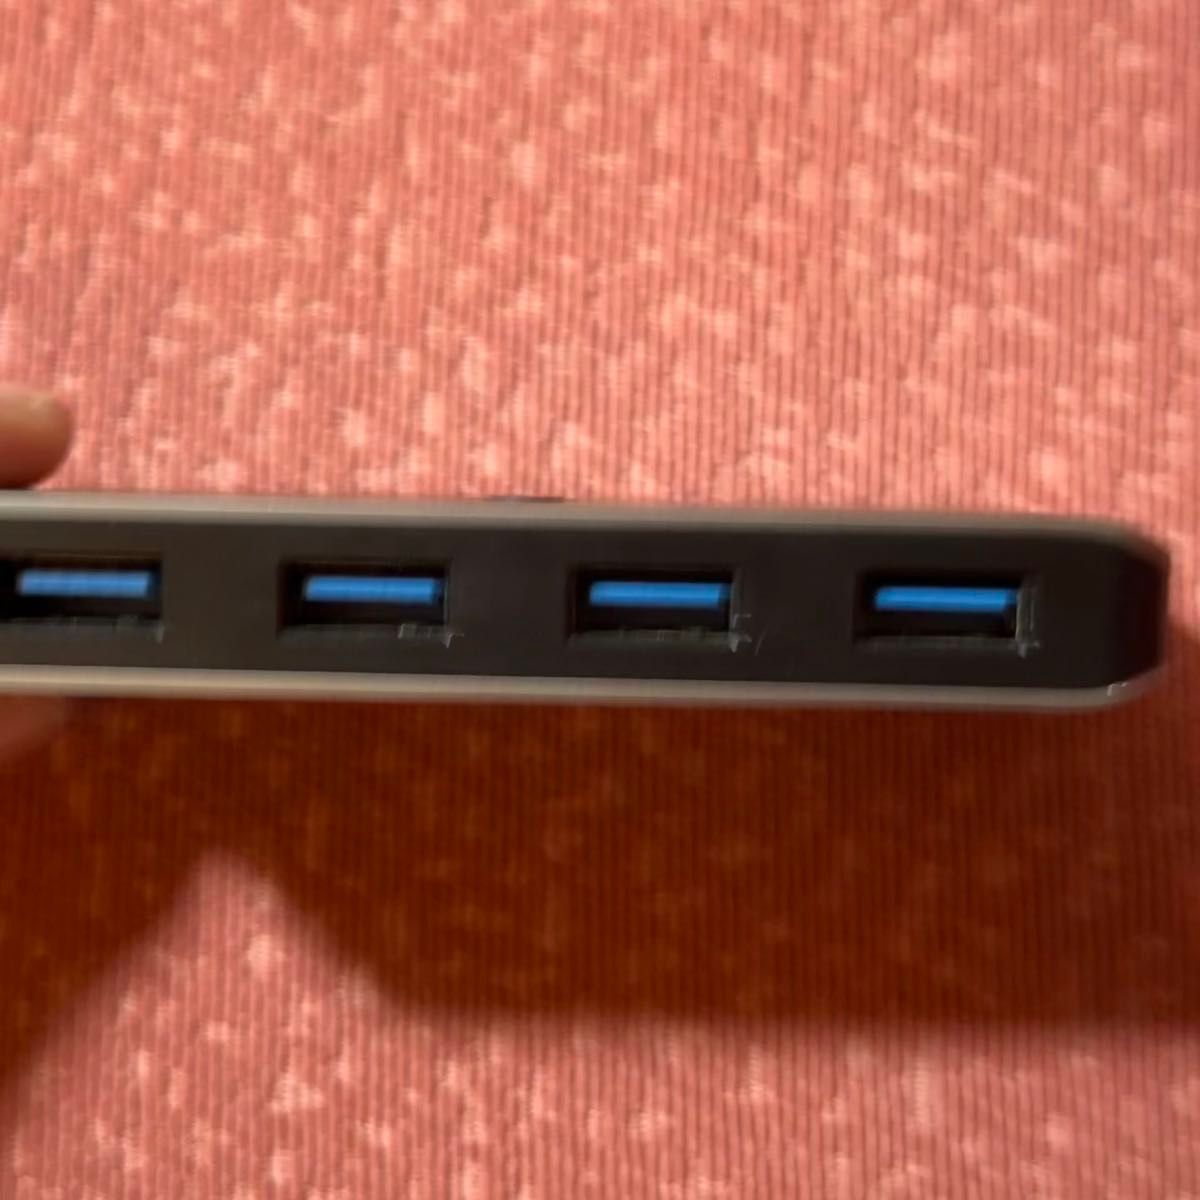 USBハブ アルミ製 スイッチセレクター 4つのUSBデバイスを共有 USB 2.0 周辺スイッチャー 